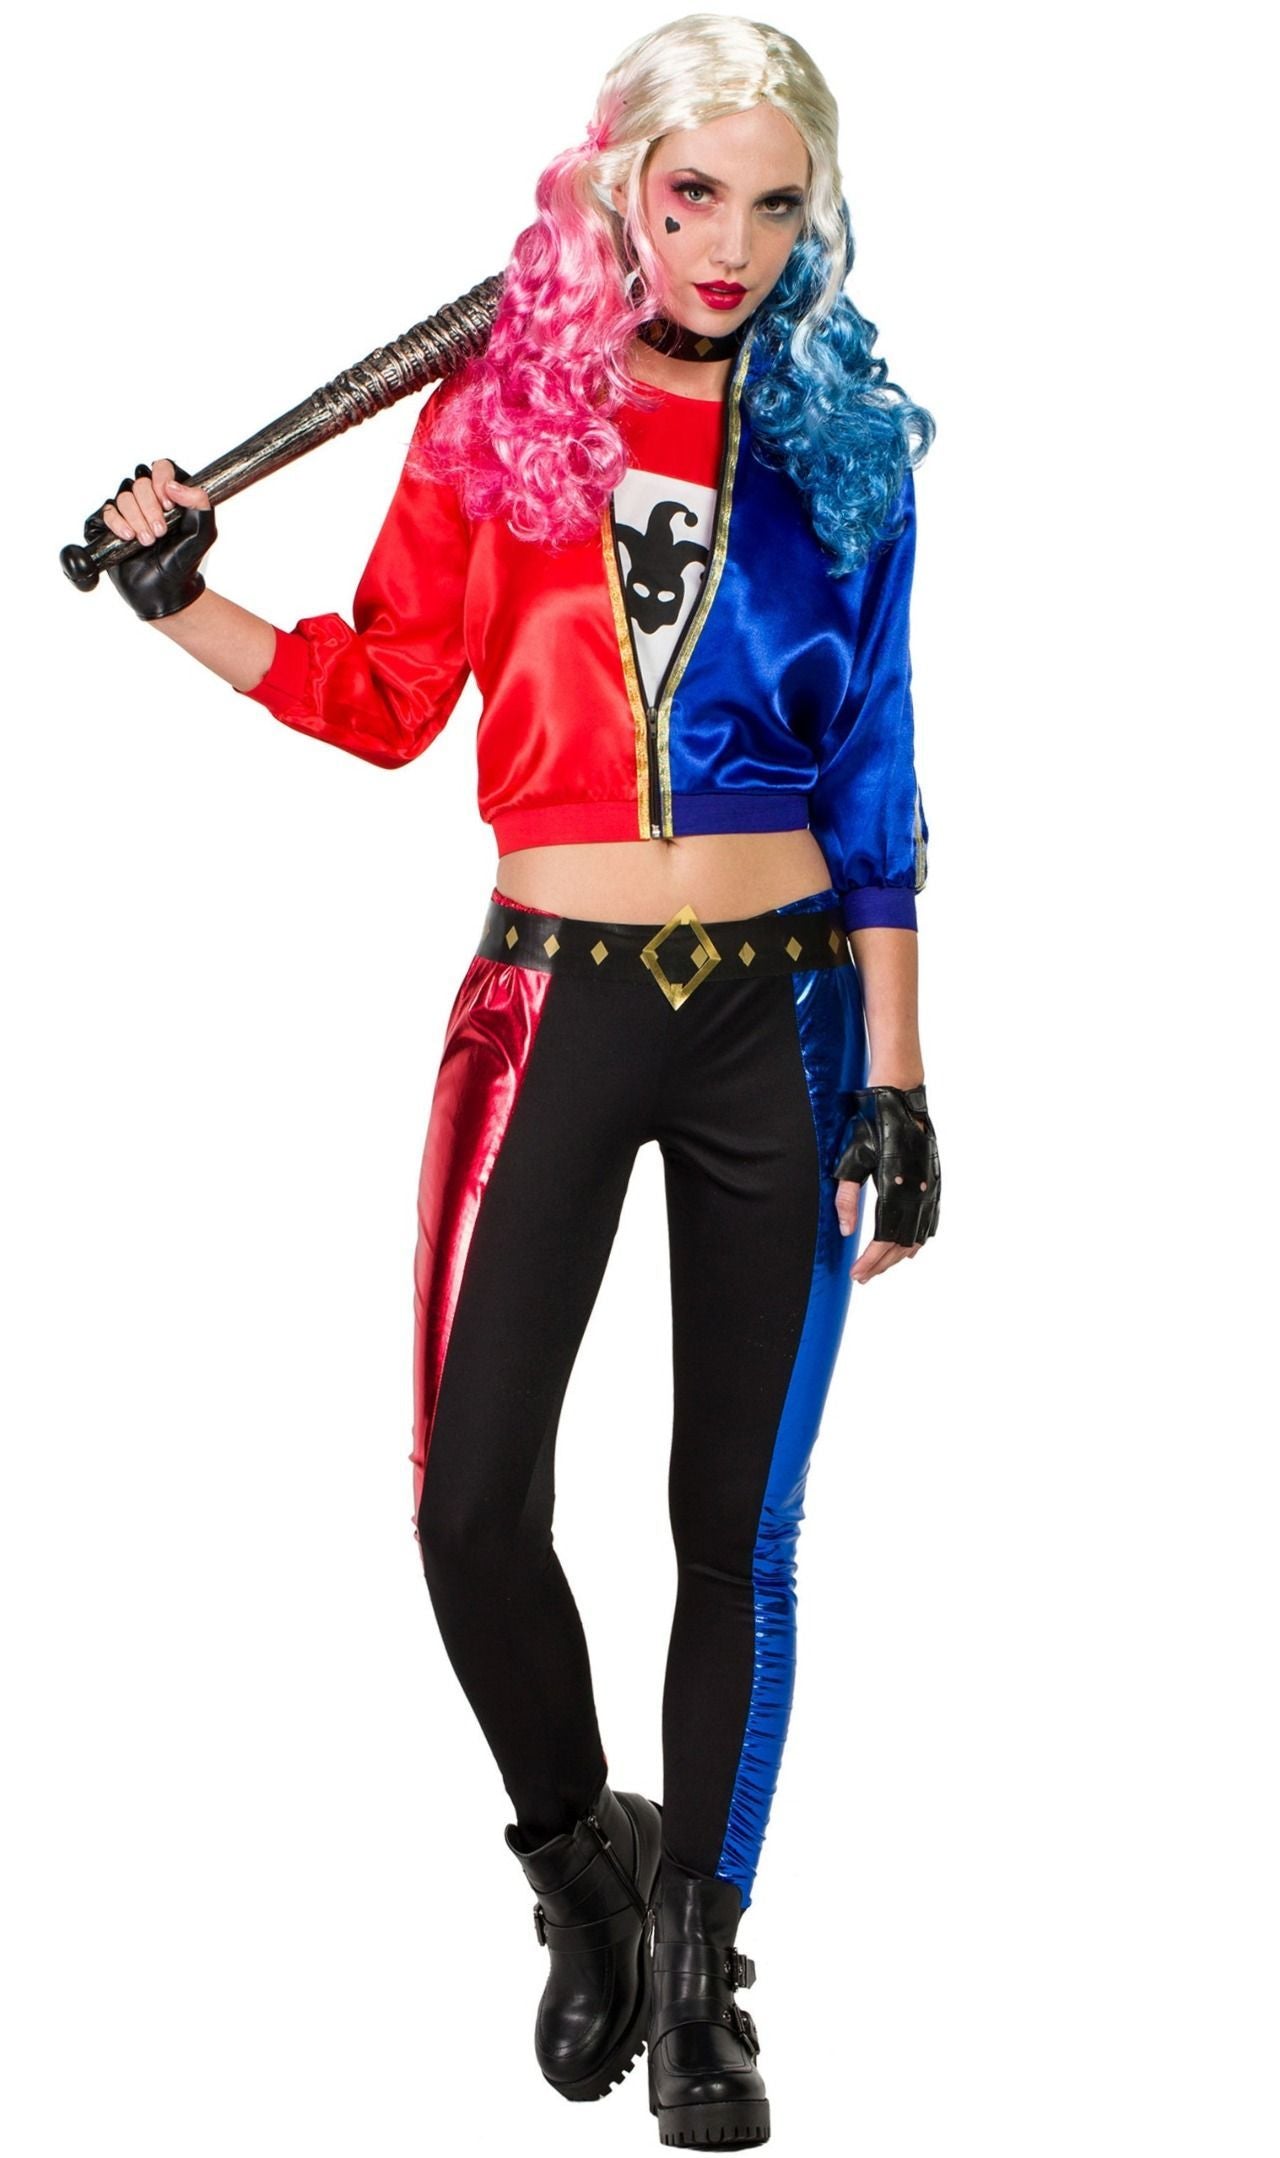 Acquista: Costumi di gruppo da Harley Quinn e Joker Crazy